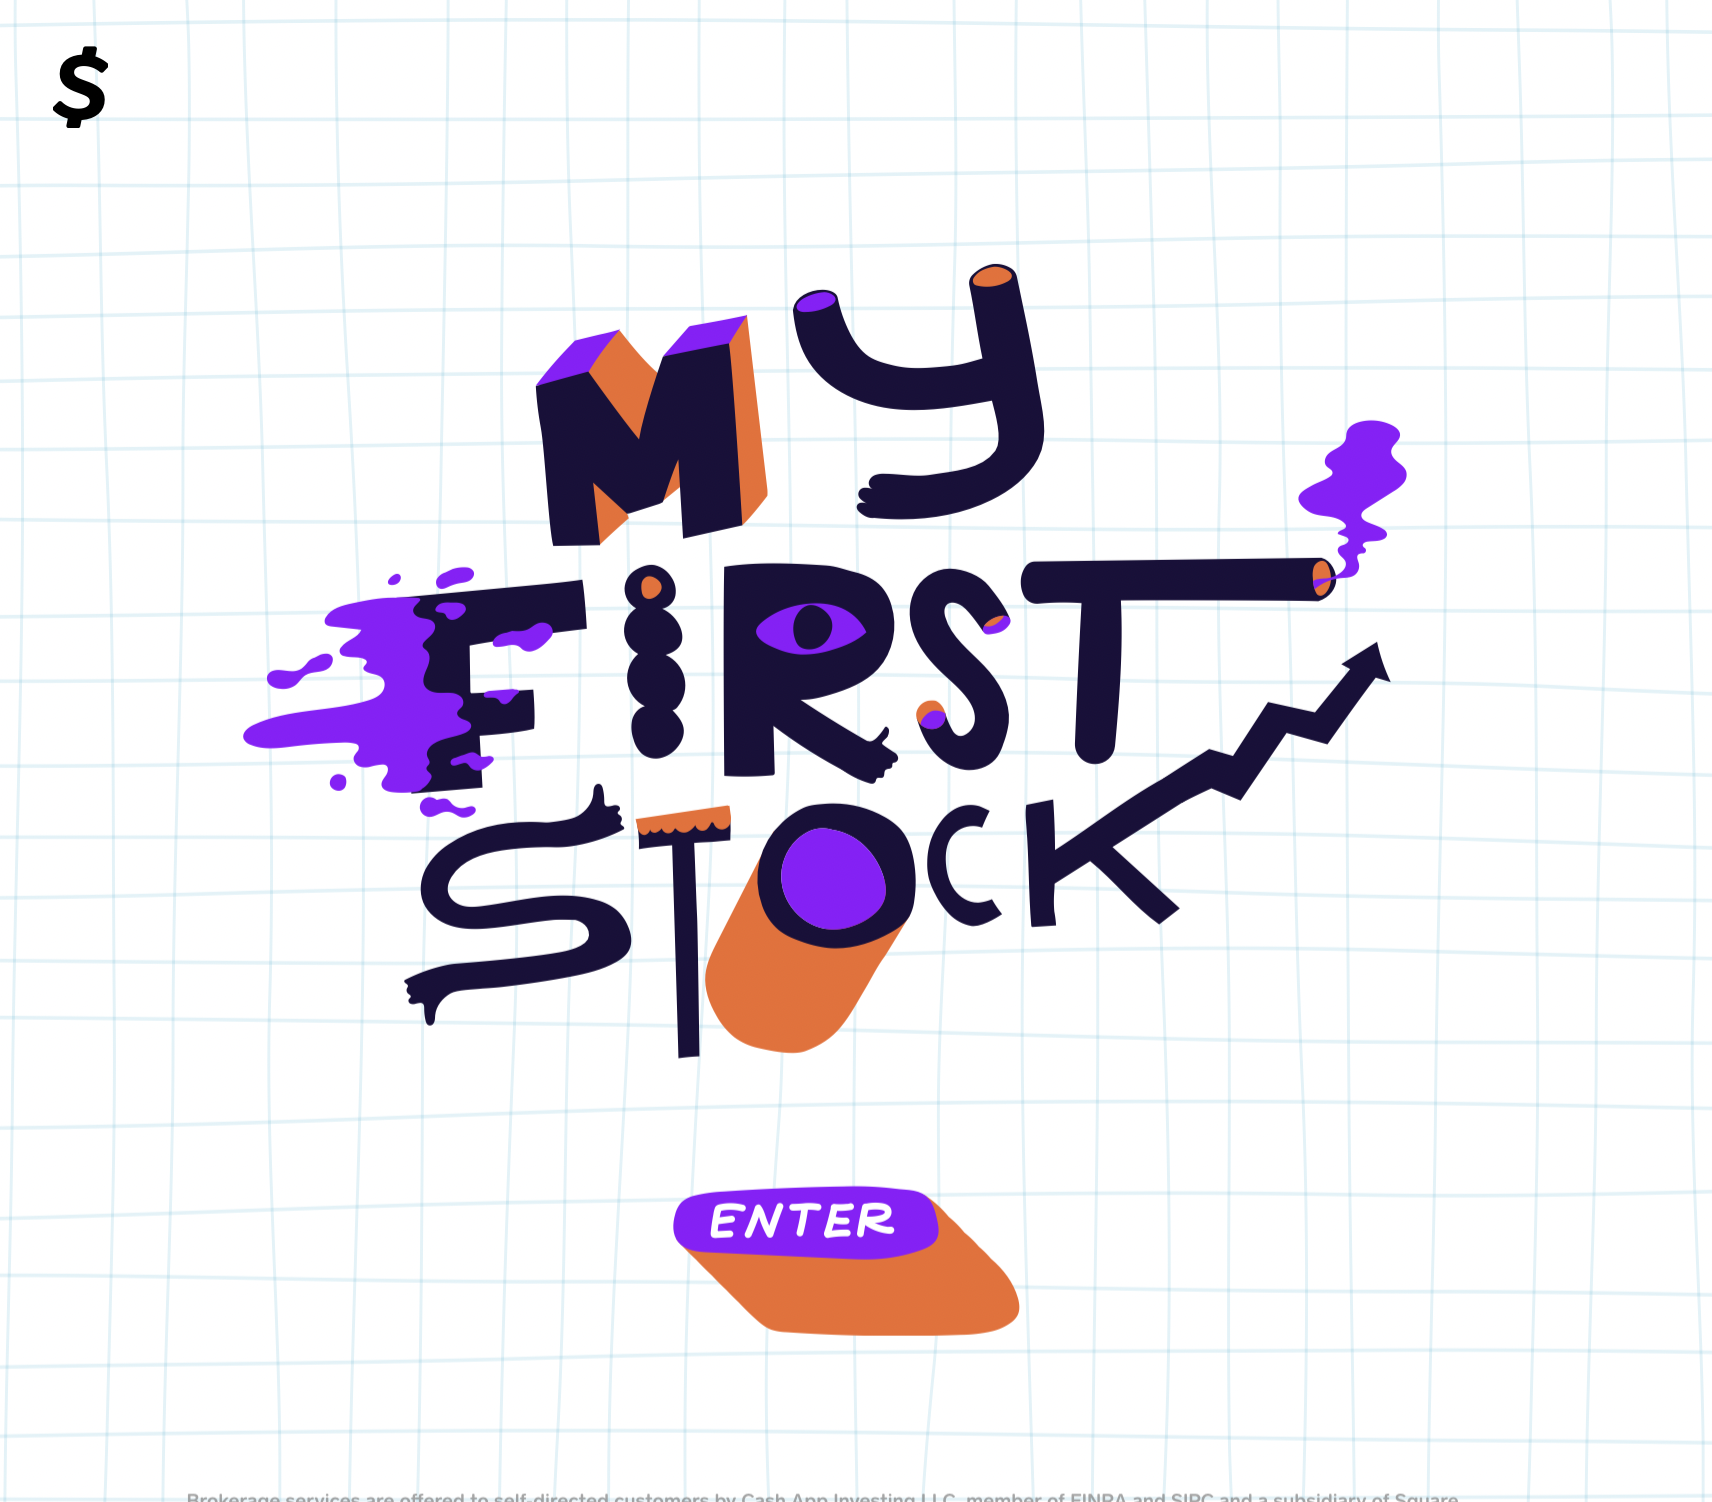 Cash App My First Stock